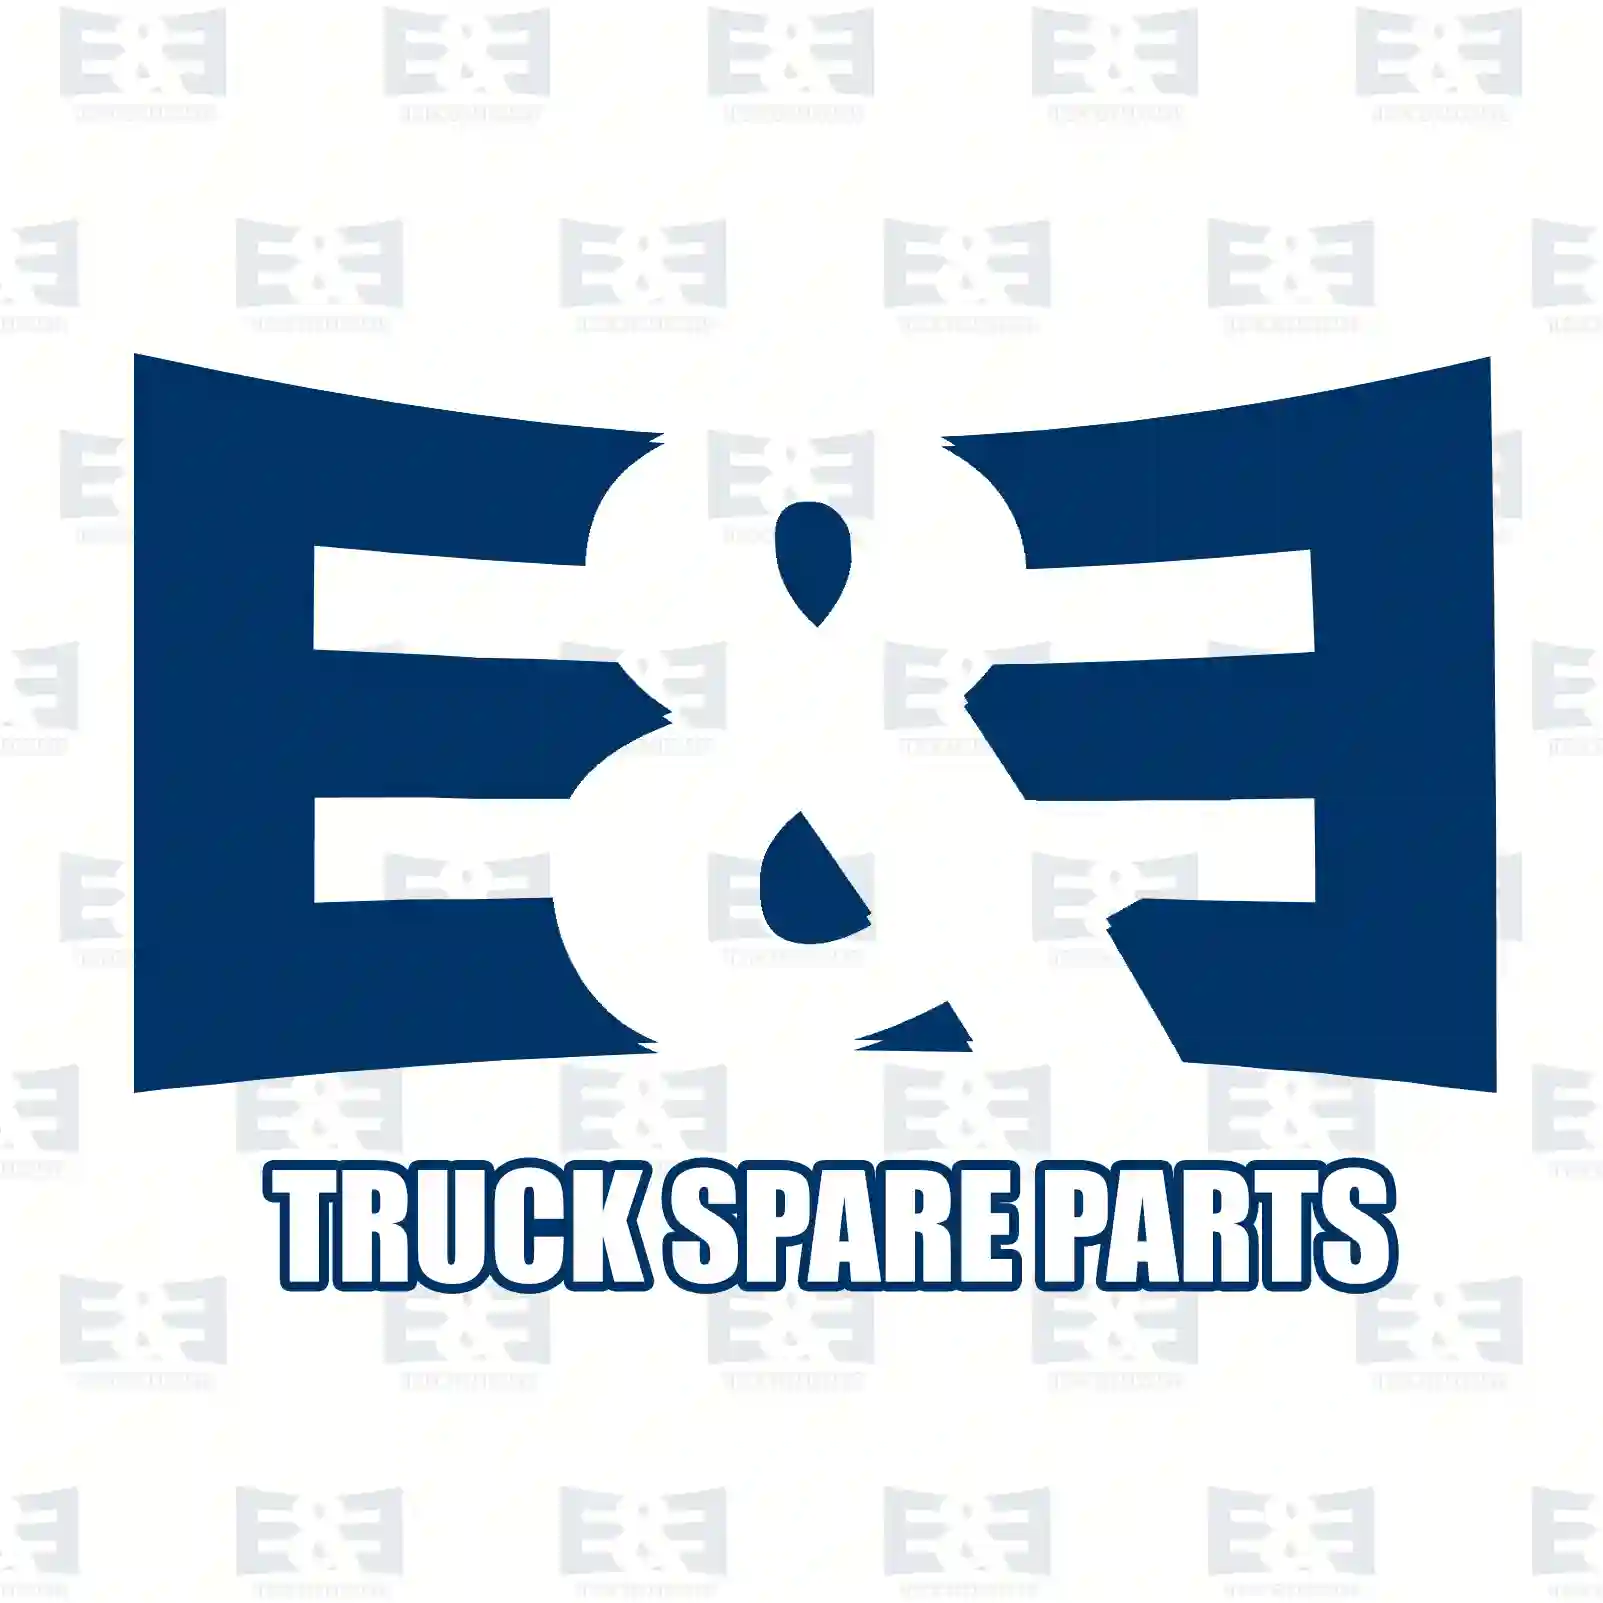 Air spring, 2E2283965, 7421978492, 21978 ||  2E2283965 E&E Truck Spare Parts | Truck Spare Parts, Auotomotive Spare Parts Air spring, 2E2283965, 7421978492, 21978 ||  2E2283965 E&E Truck Spare Parts | Truck Spare Parts, Auotomotive Spare Parts